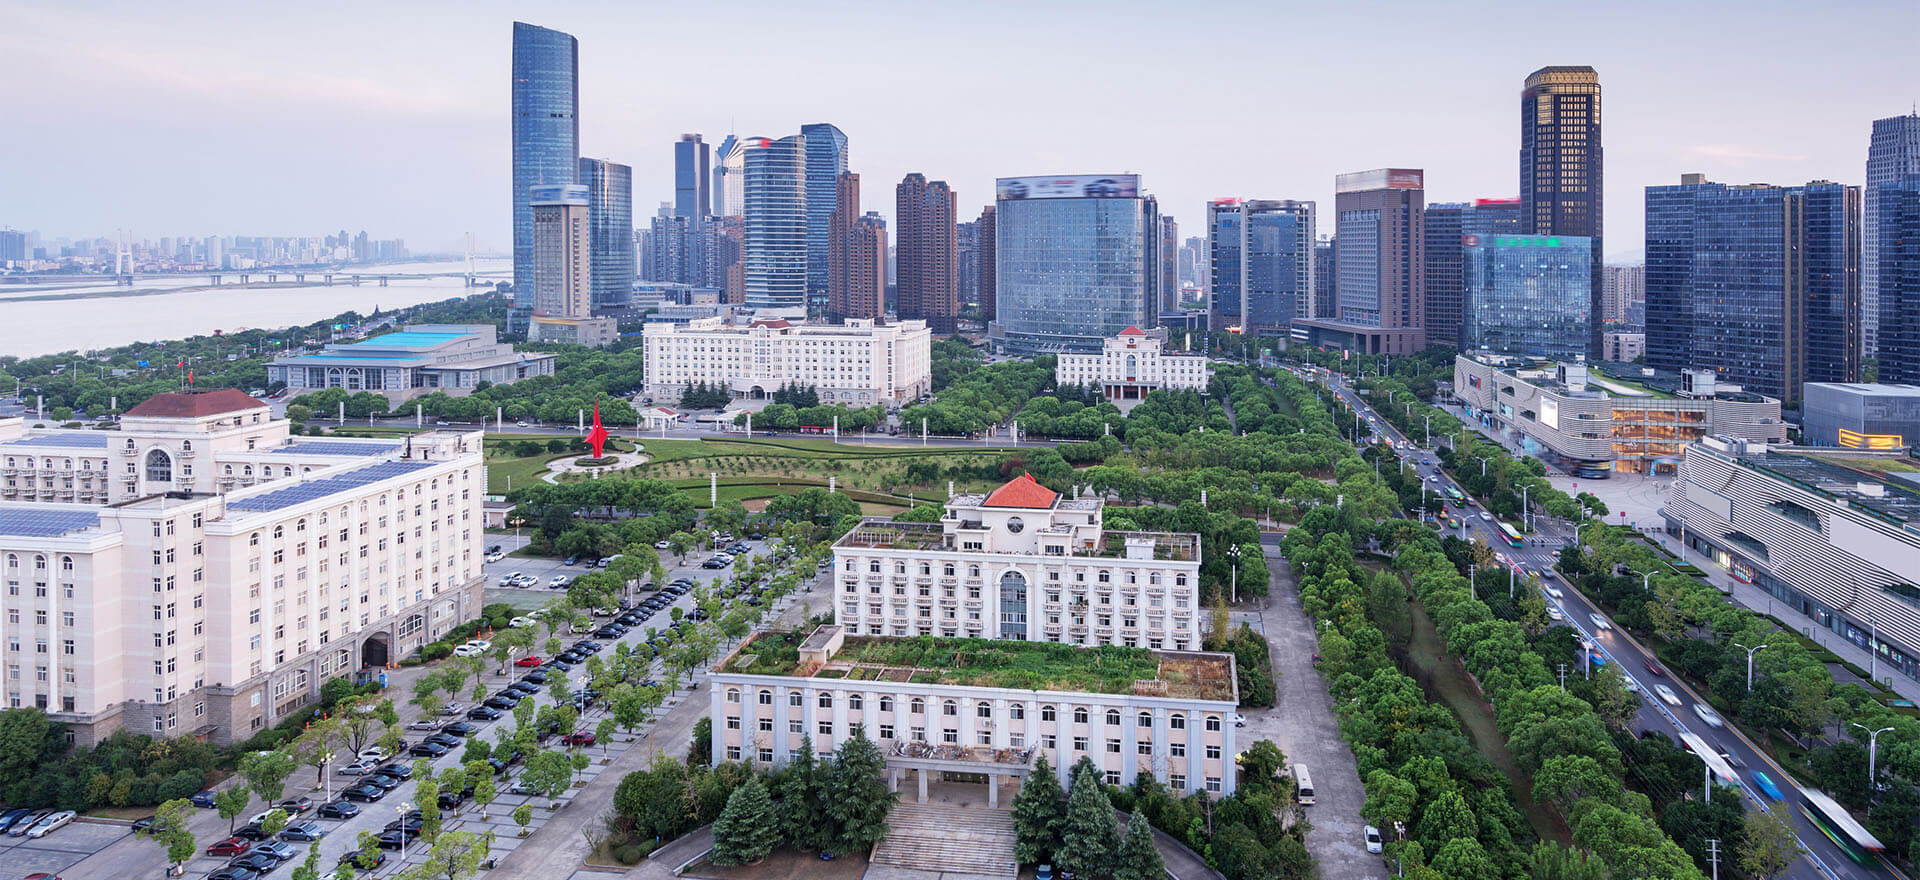 Beijing, China cityscape at the CBD